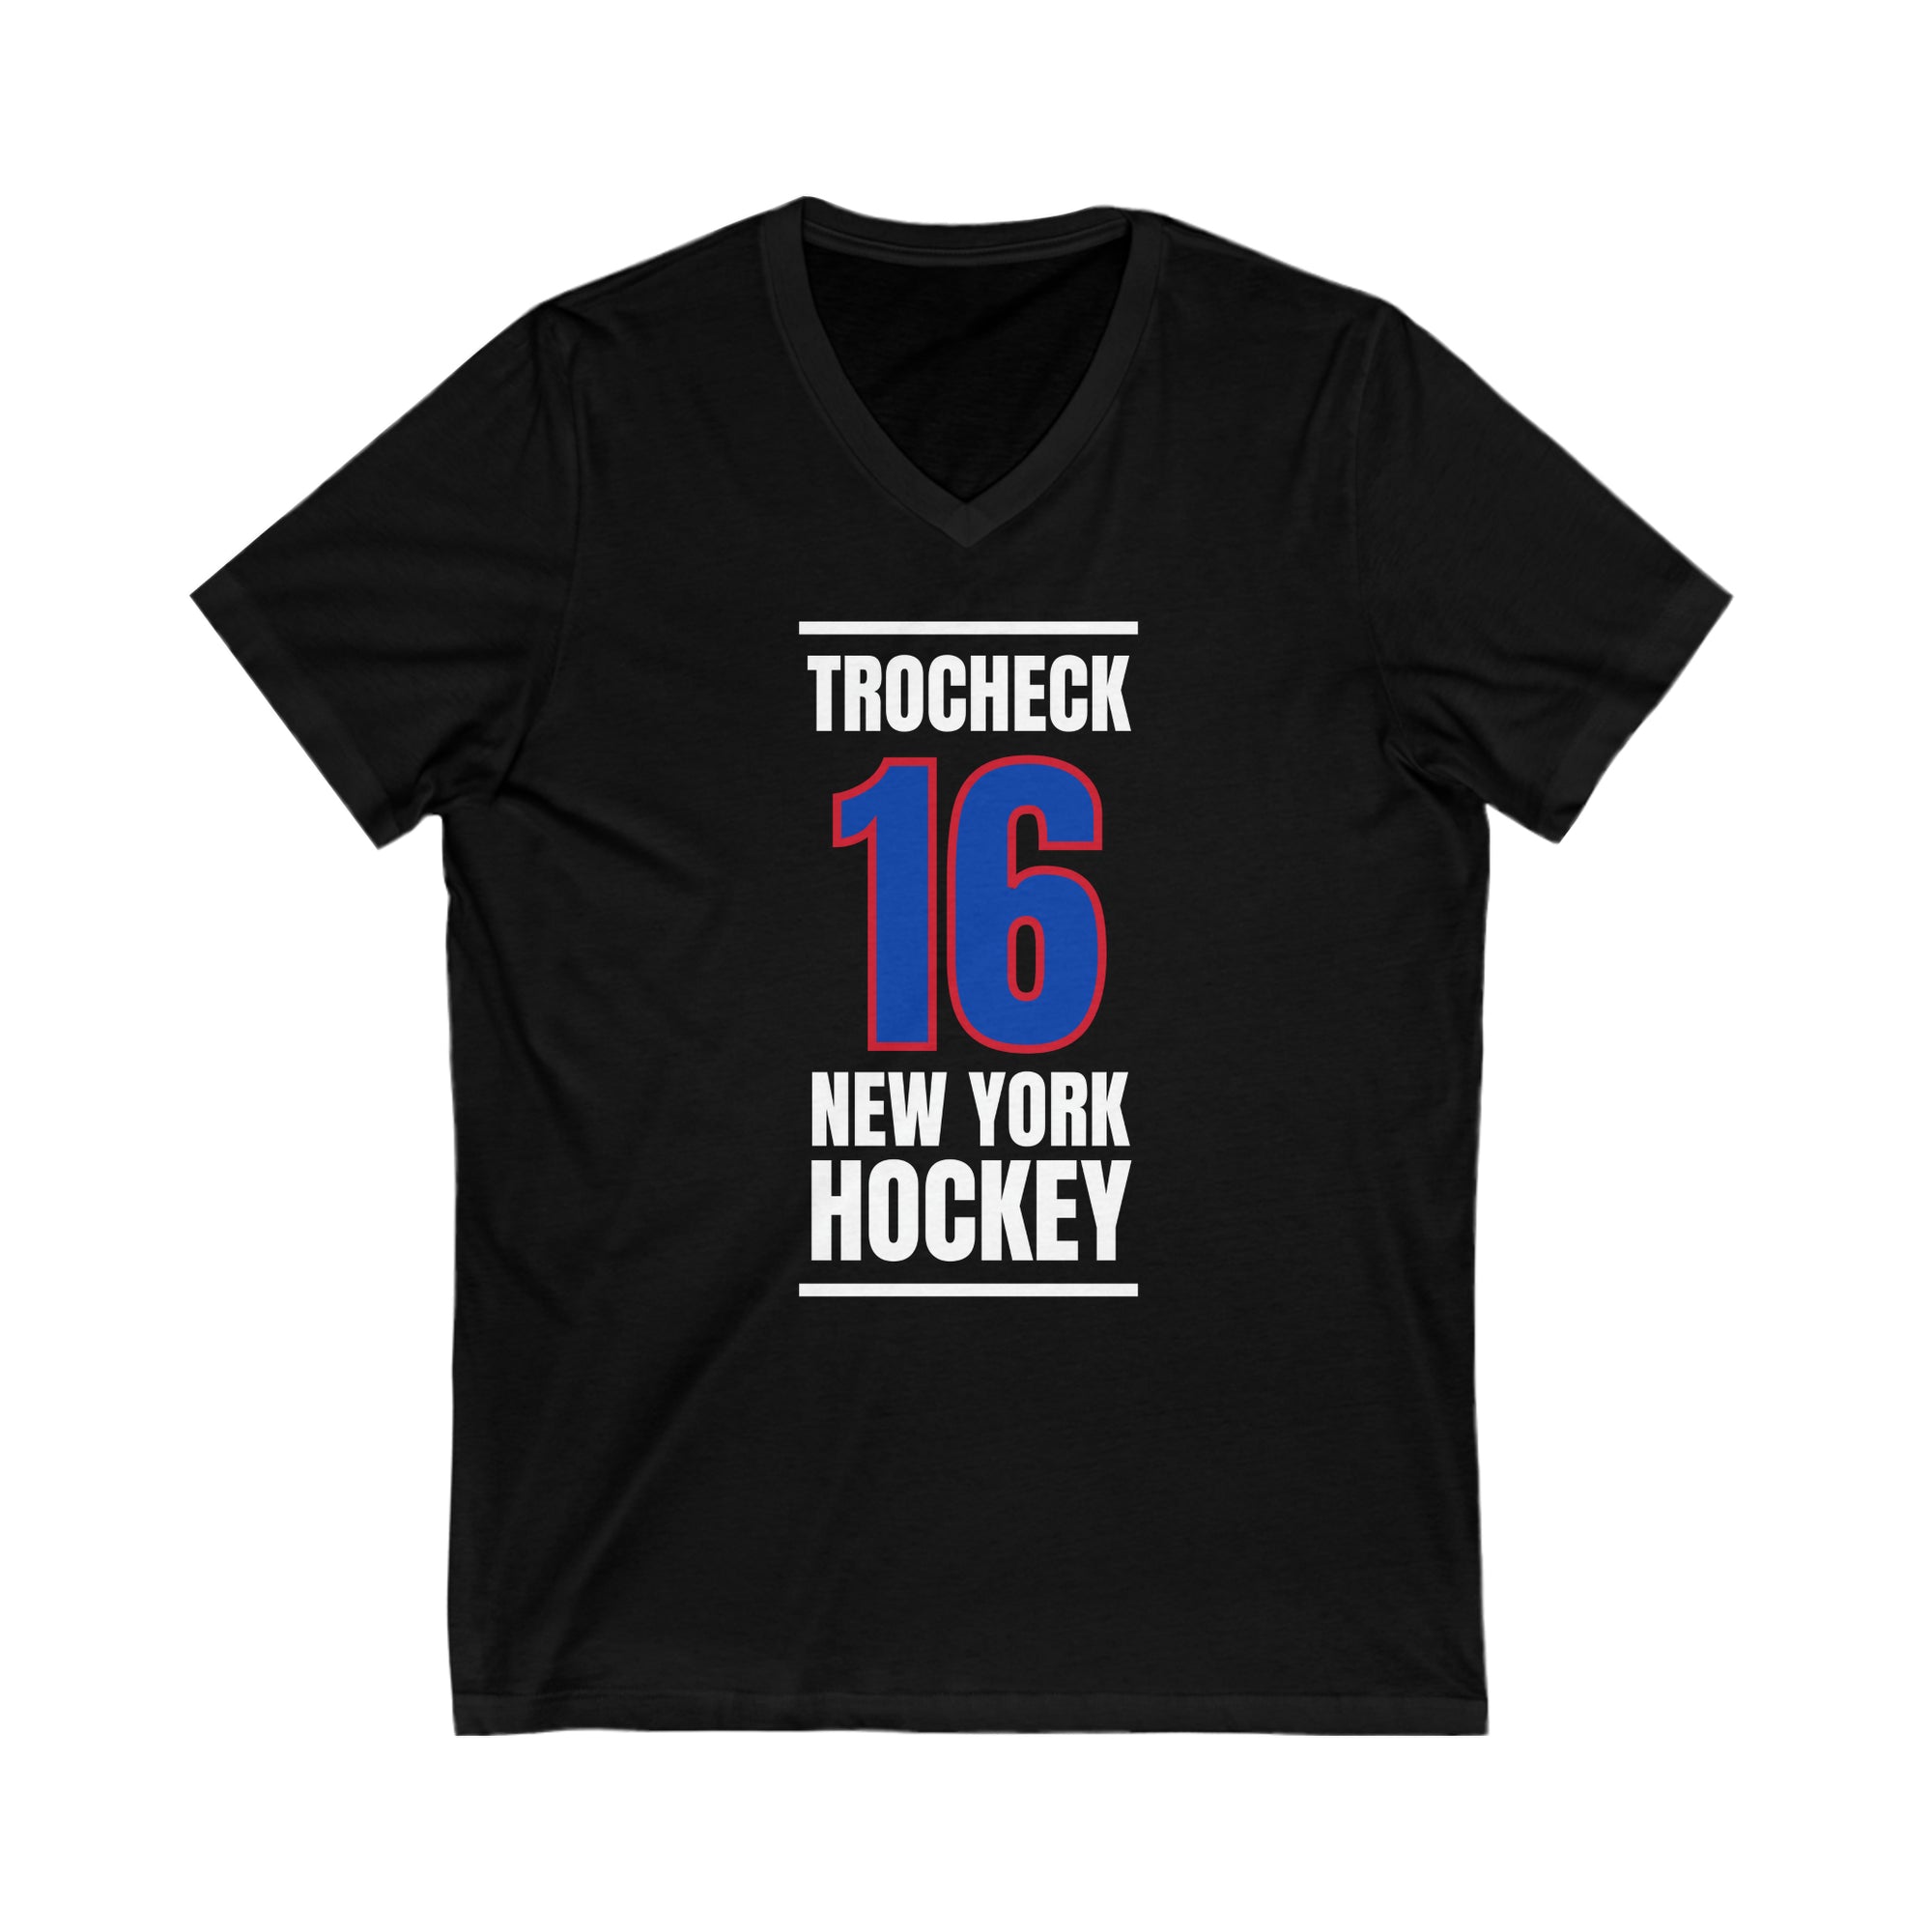 Trocheck 16 New York Hockey Royal Blue Vertical Design Unisex V-Neck Tee